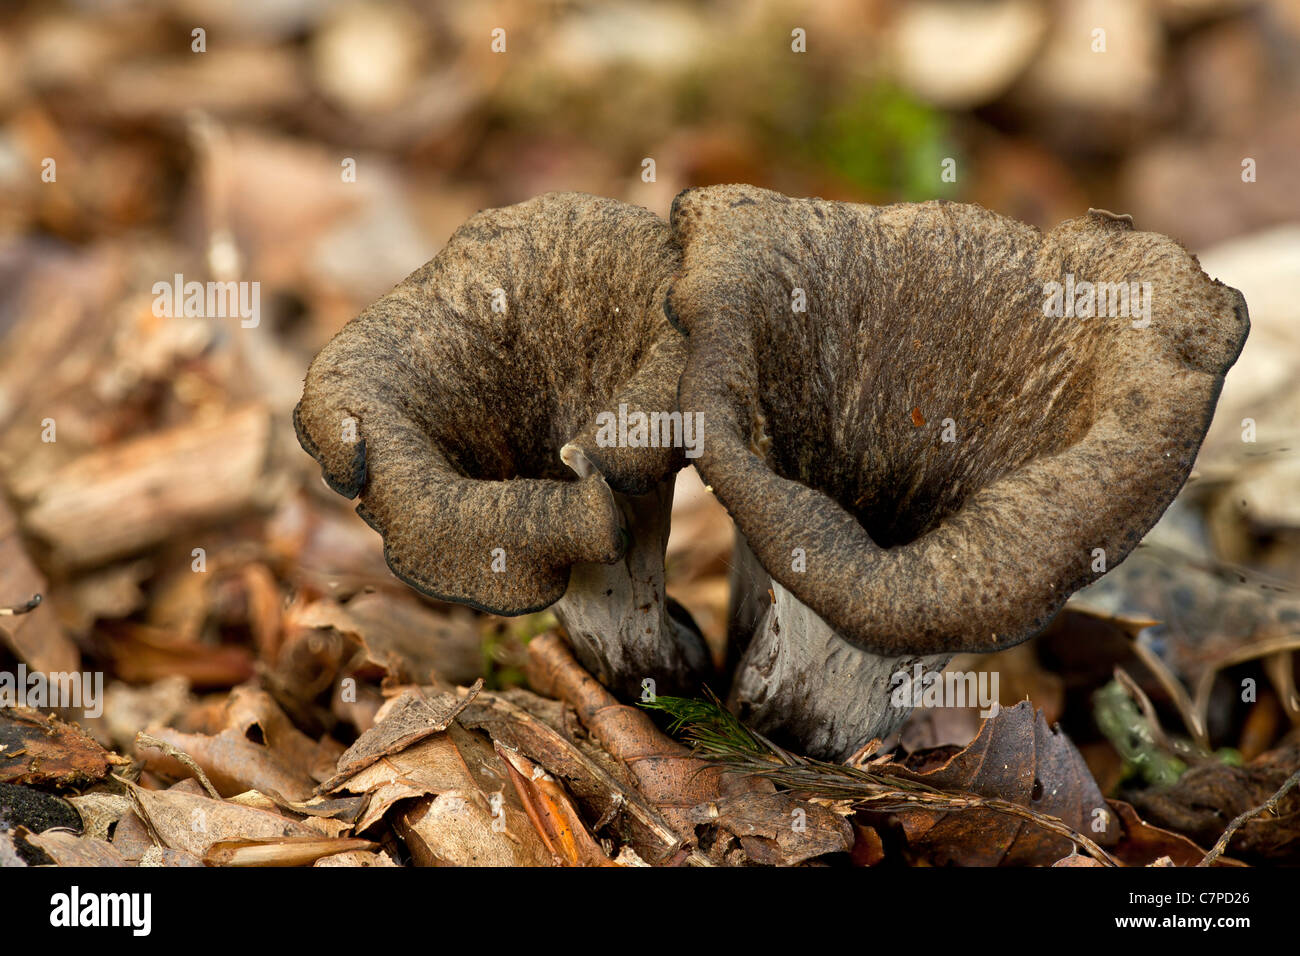 Horn of Plenty fungus, Craterellus cornucopioides among woodland leaf litter. Edible. New Forest, Hants Stock Photo